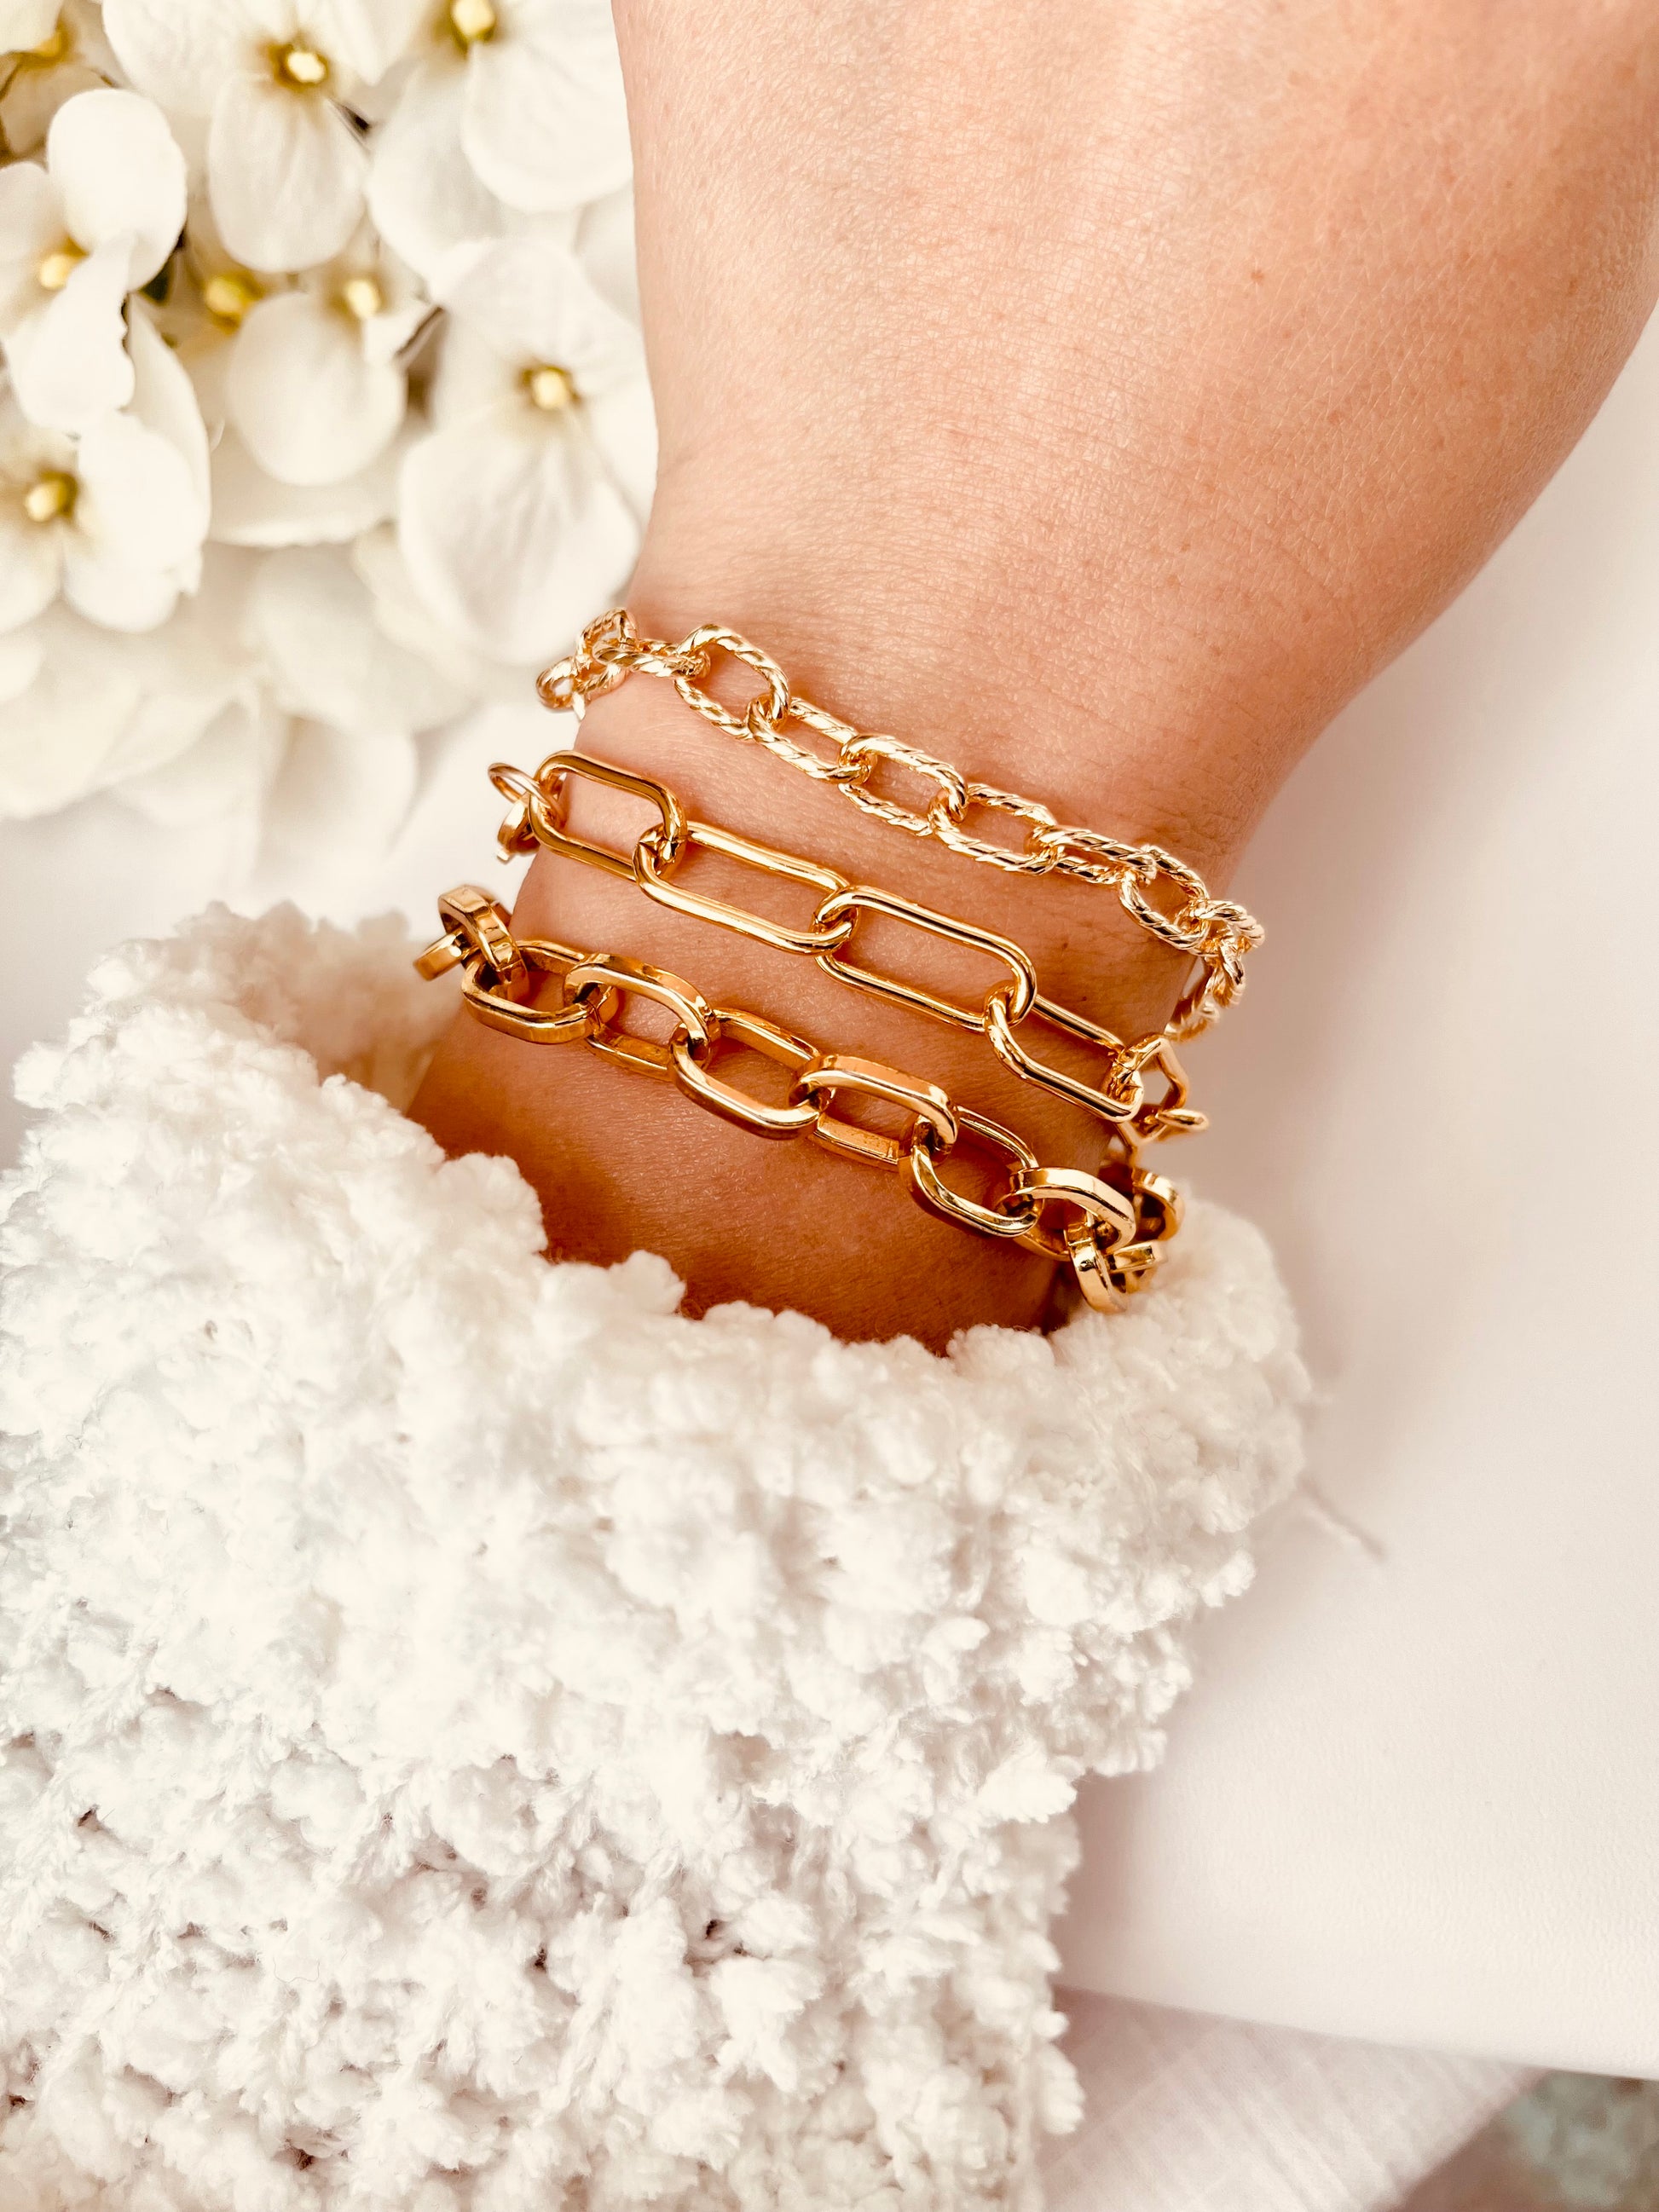 Chain Bracelet, Twisted Link Chain Bracelet, 14K Gold Filled Thick Bracelet, Statement Bracelet, Statement Jewelry, Mother’s Day Gifts